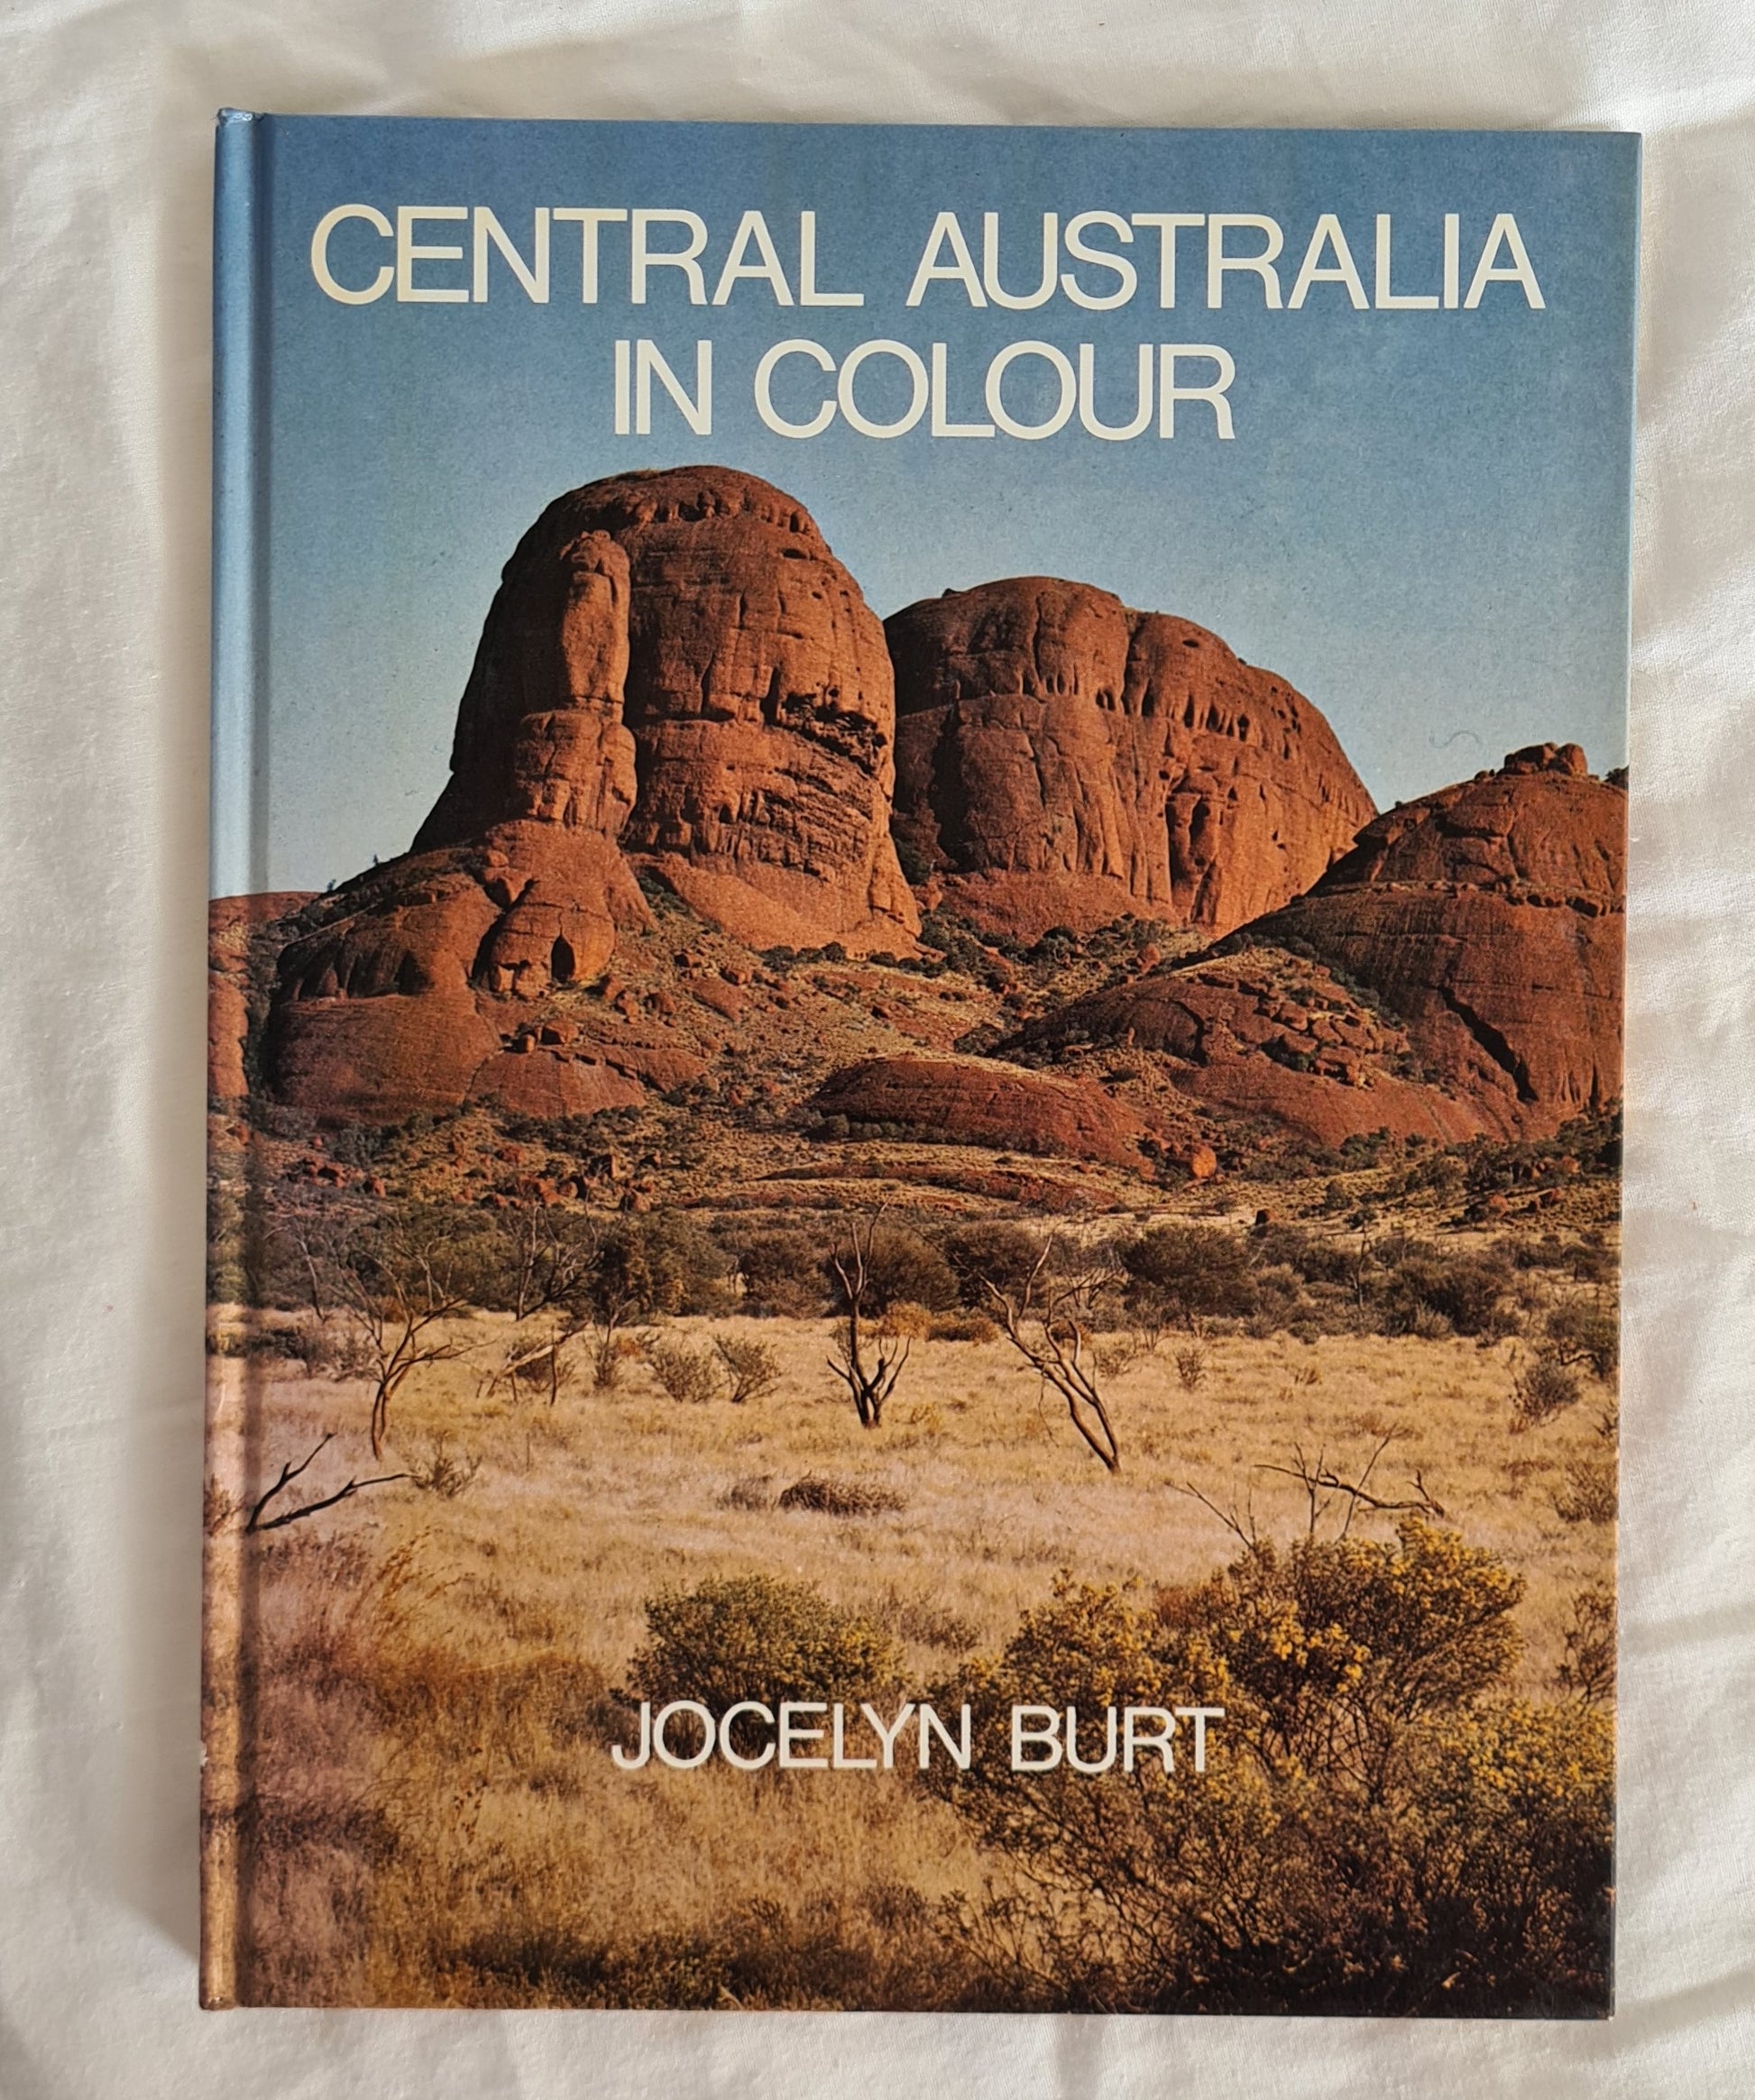 Central Australia in Colour by Jocelyn Burt